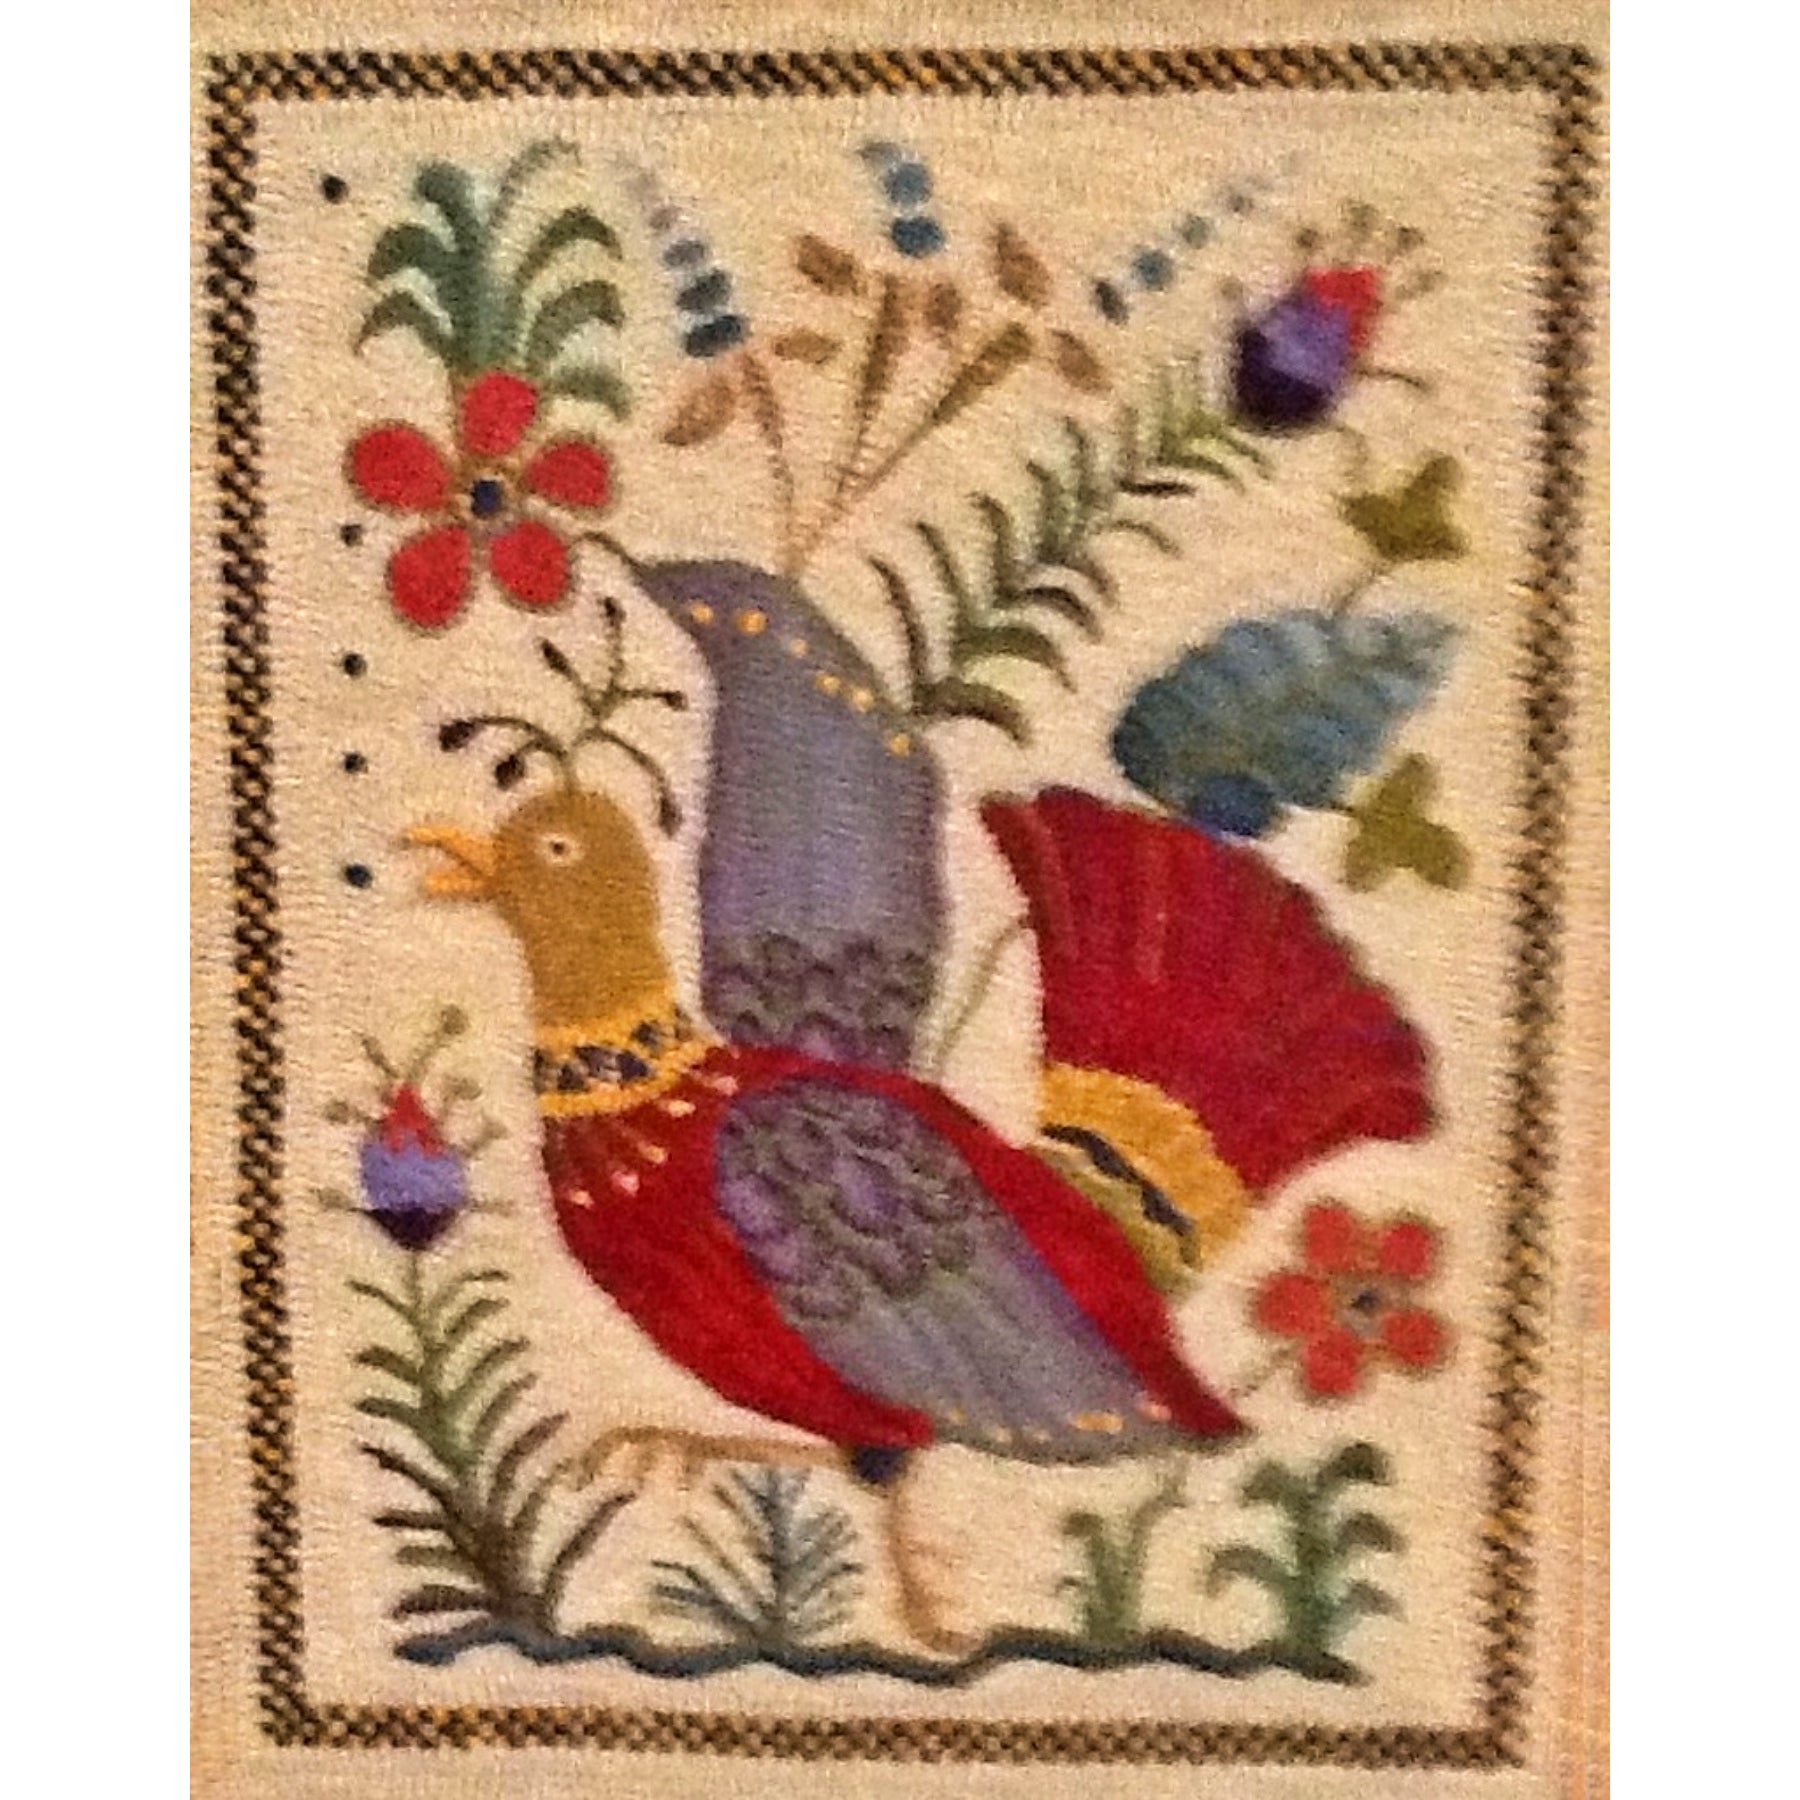 Oh Joyful Color, rug hooked by Linda Marchbank